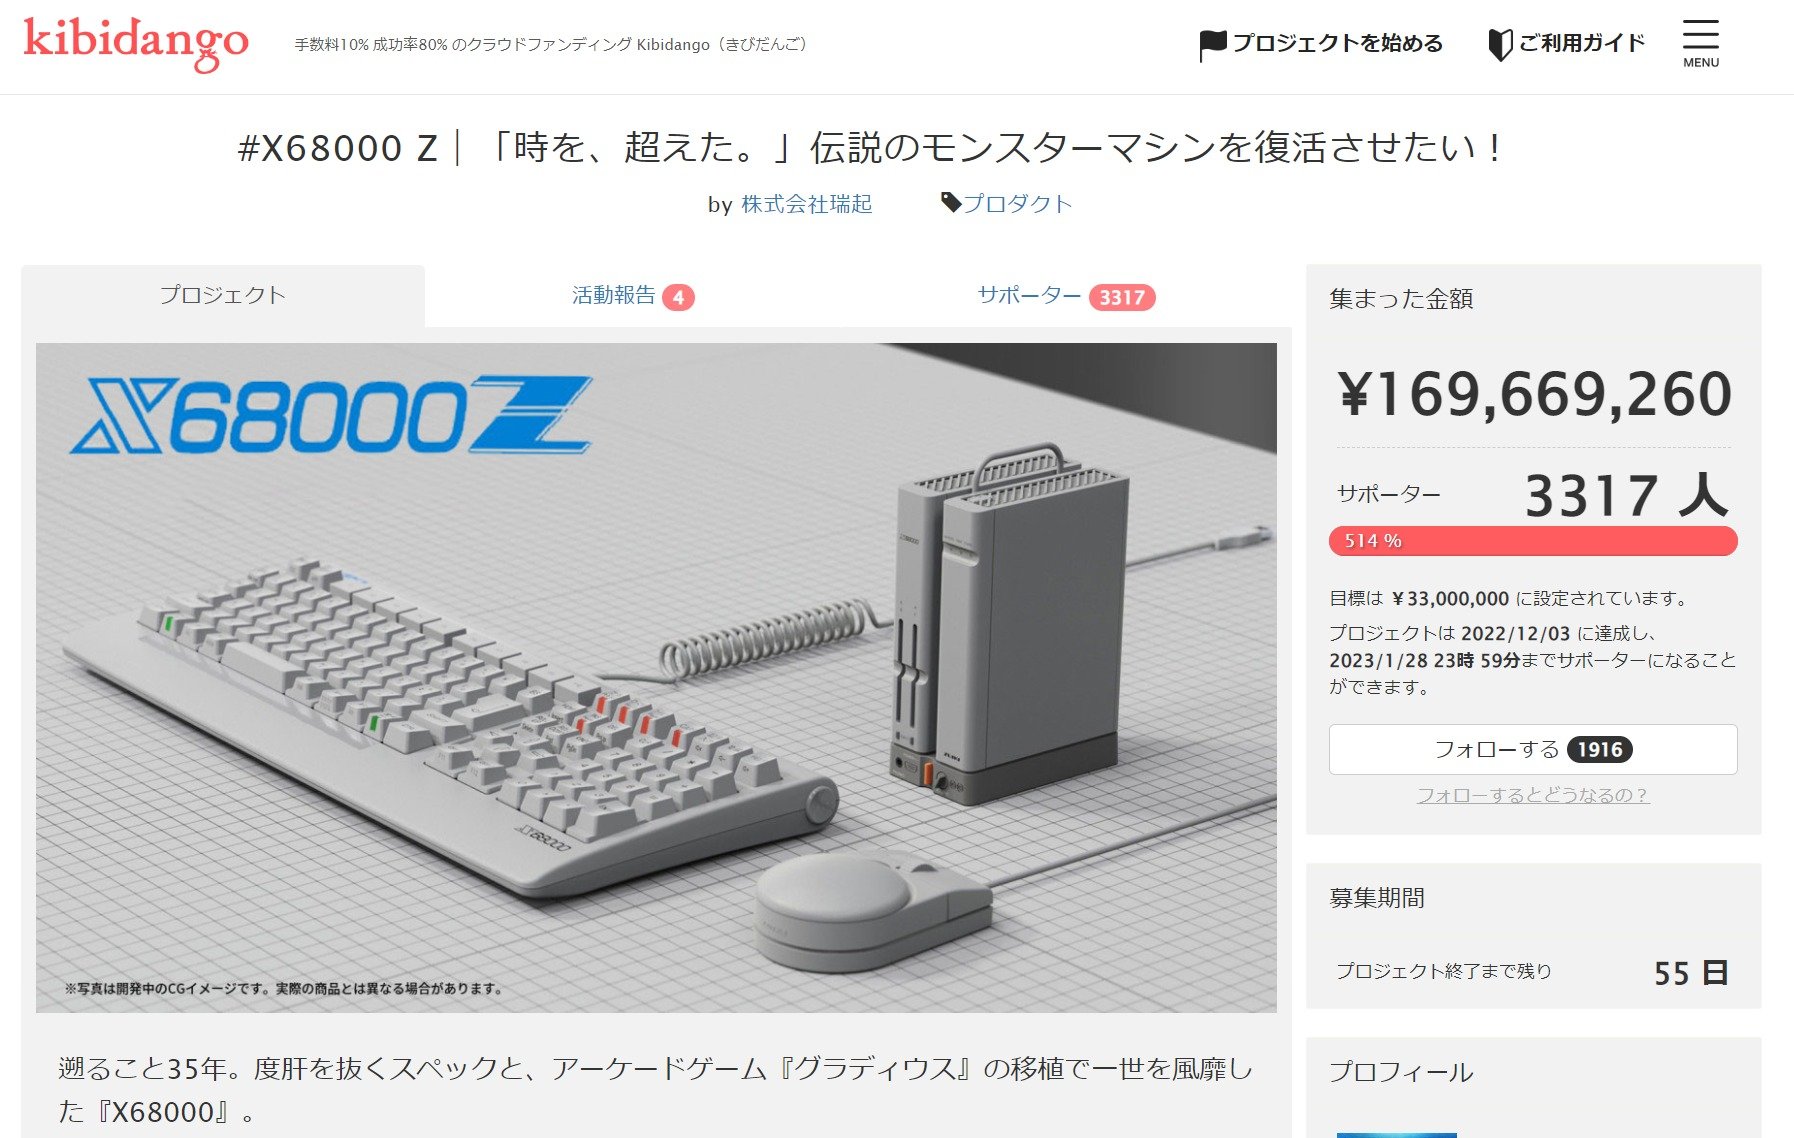 X68000 Z」クラファン、1時間で達成 5時間で1億円集まる - ITmedia NEWS